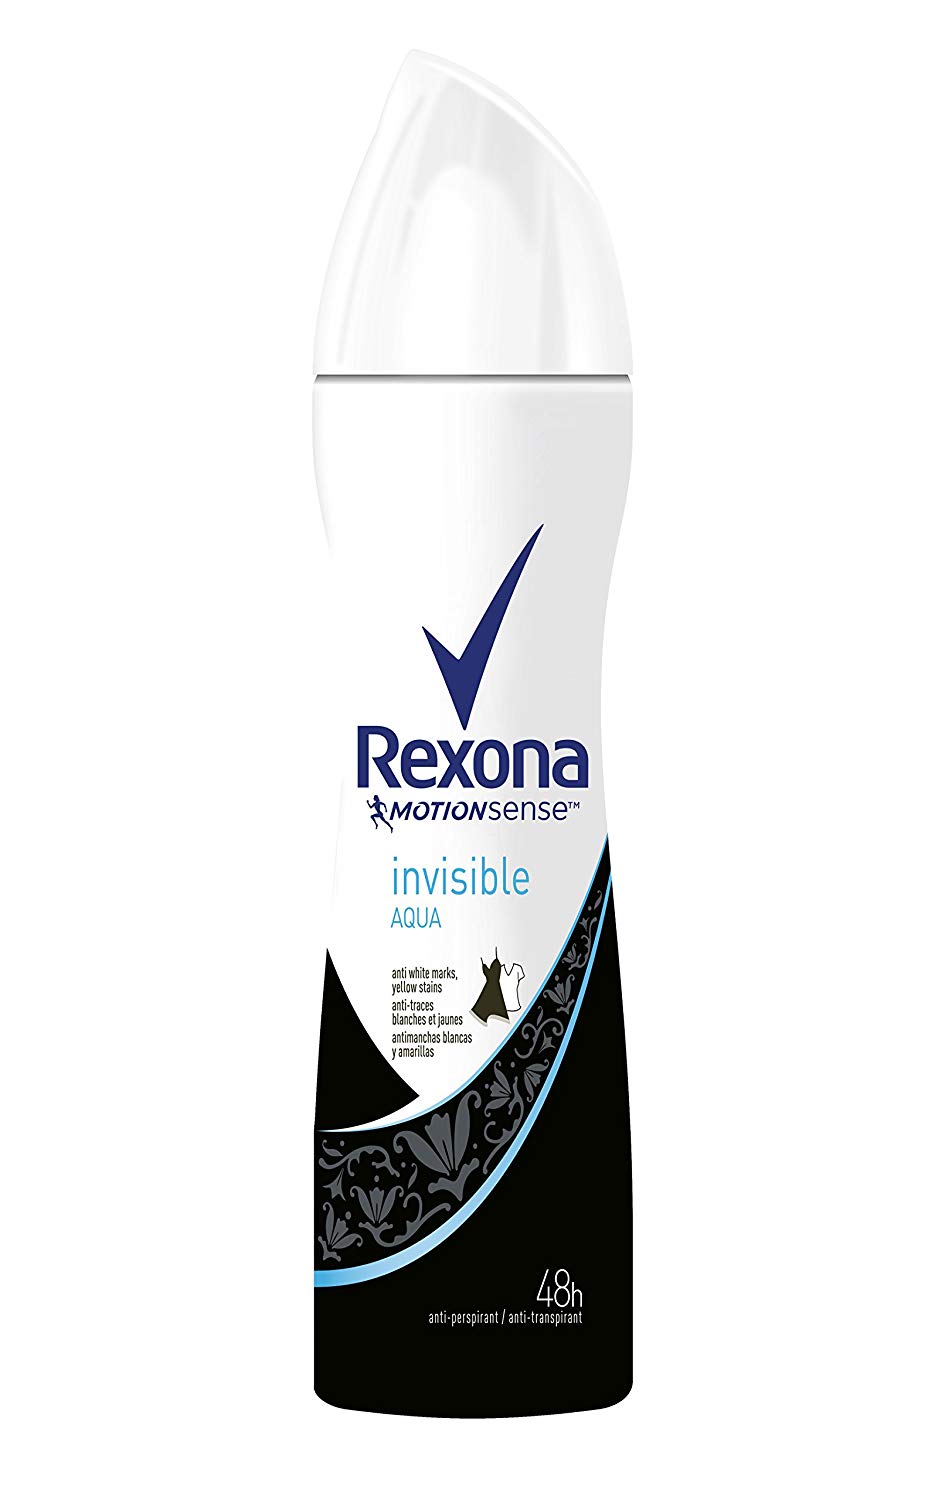 6x Desodorante Rexona Aqua solo 10,5€